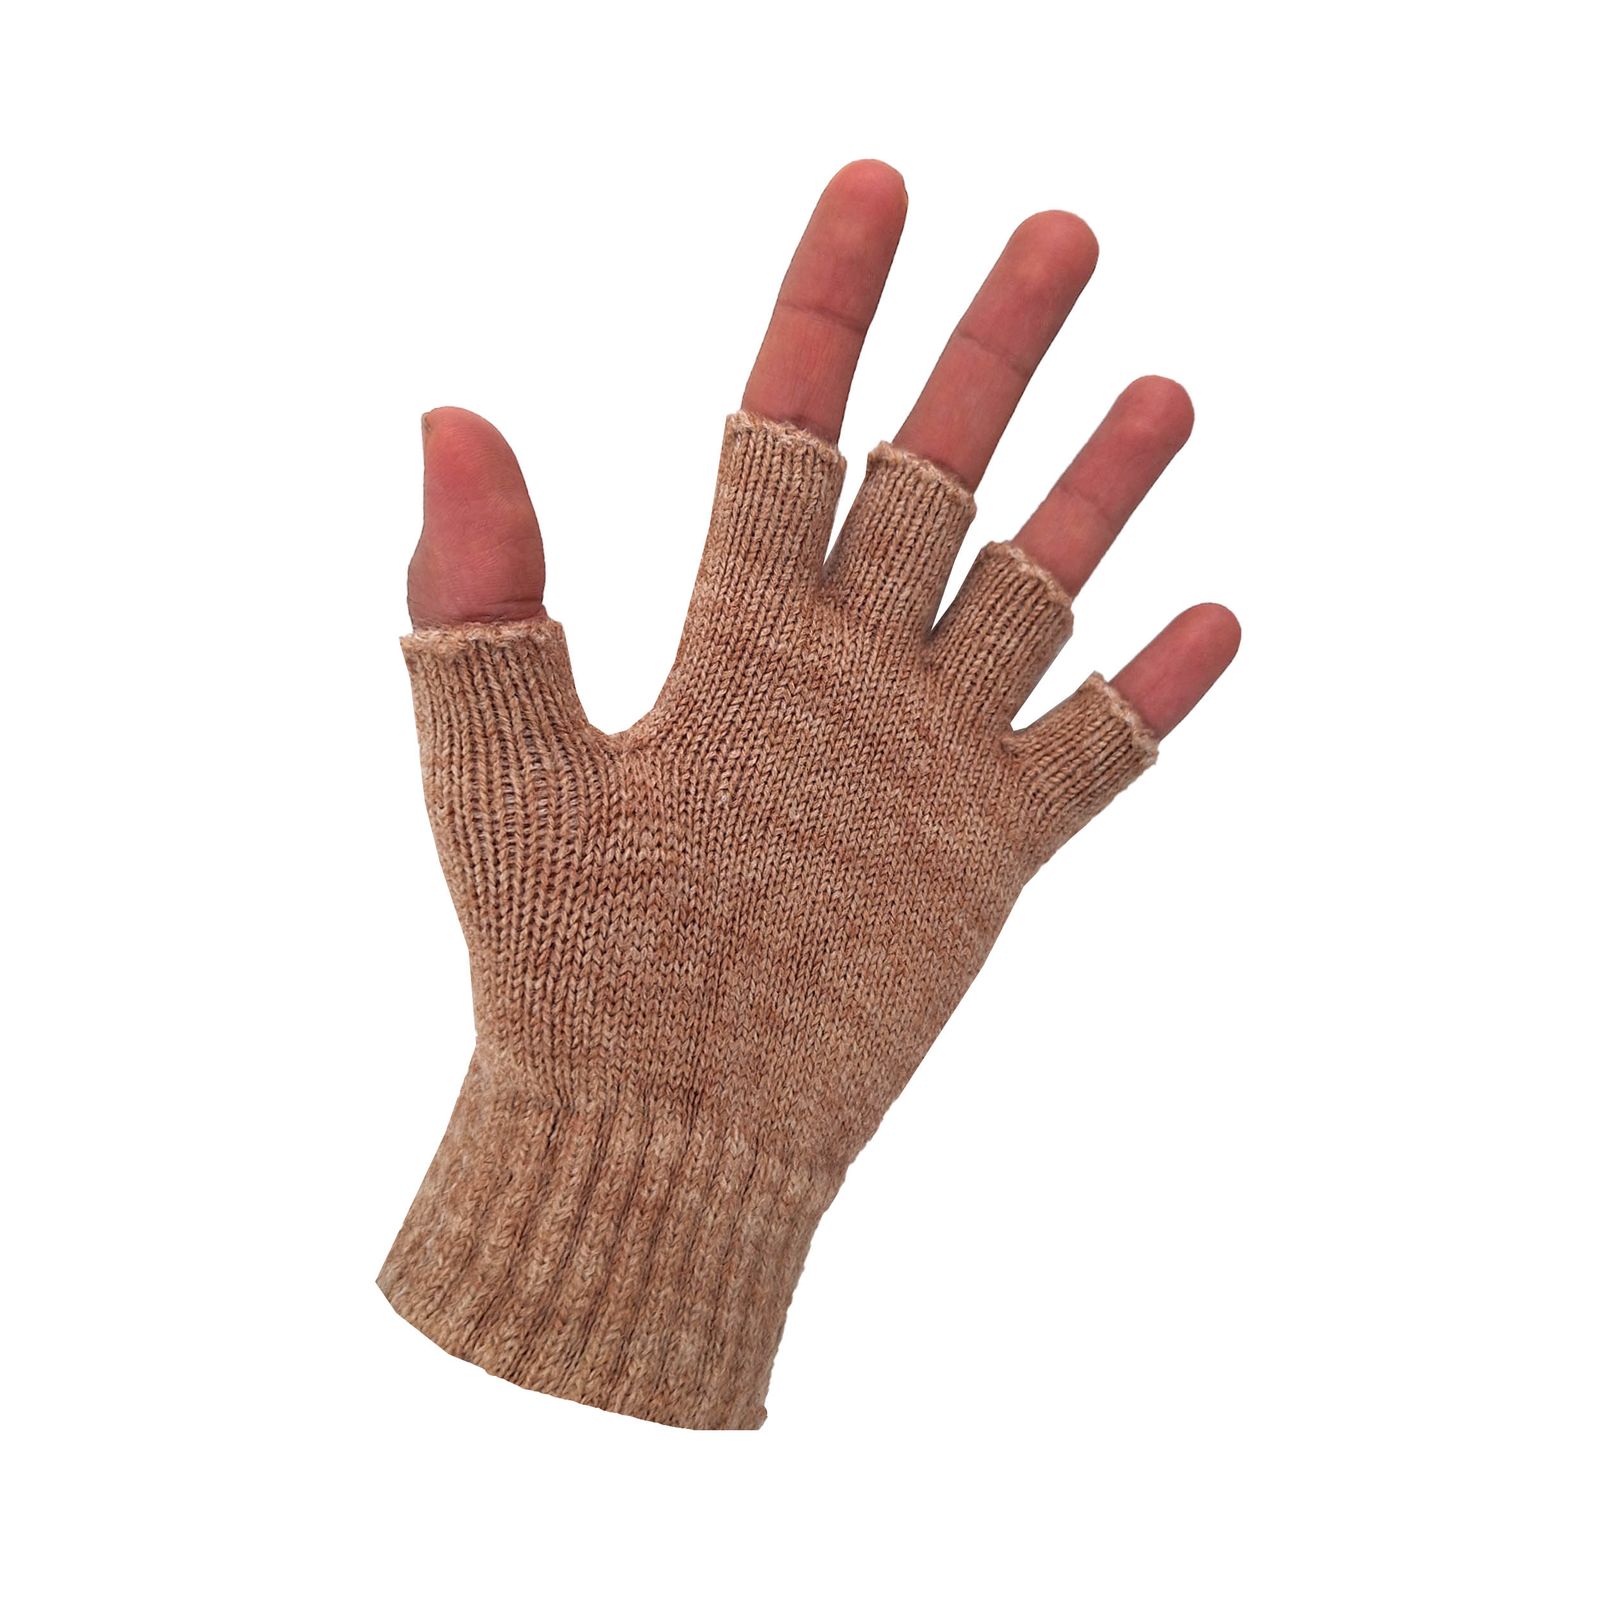 دستکش بافتنی دخترانه نیم انگشتی طرح پاپیون کد 1094 -  - 10